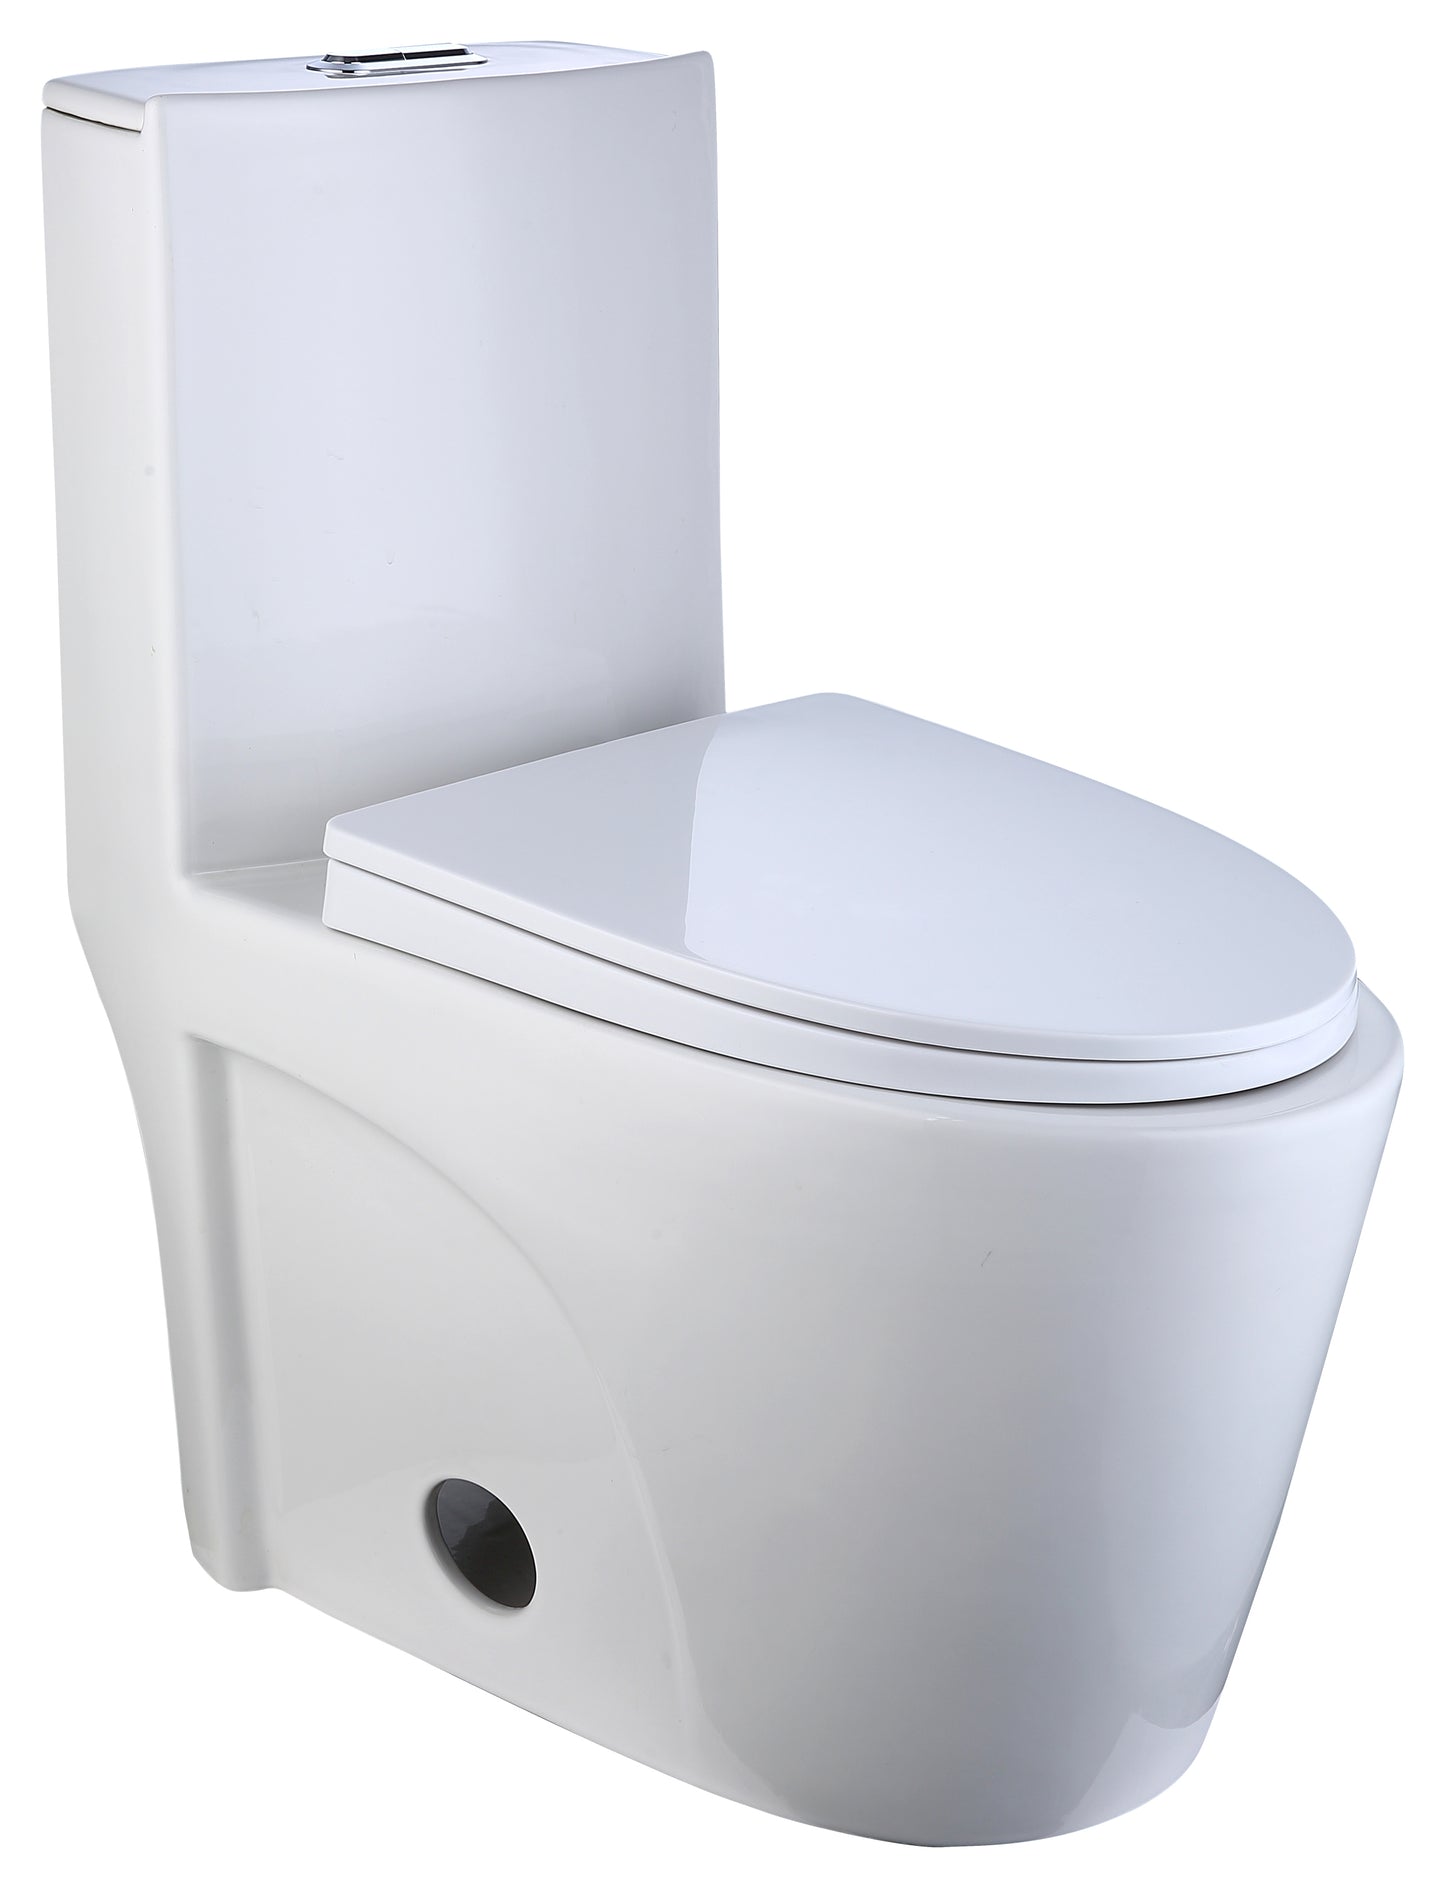 Outlet vavle for toilet 21S0901-GW & 21S0901-MB